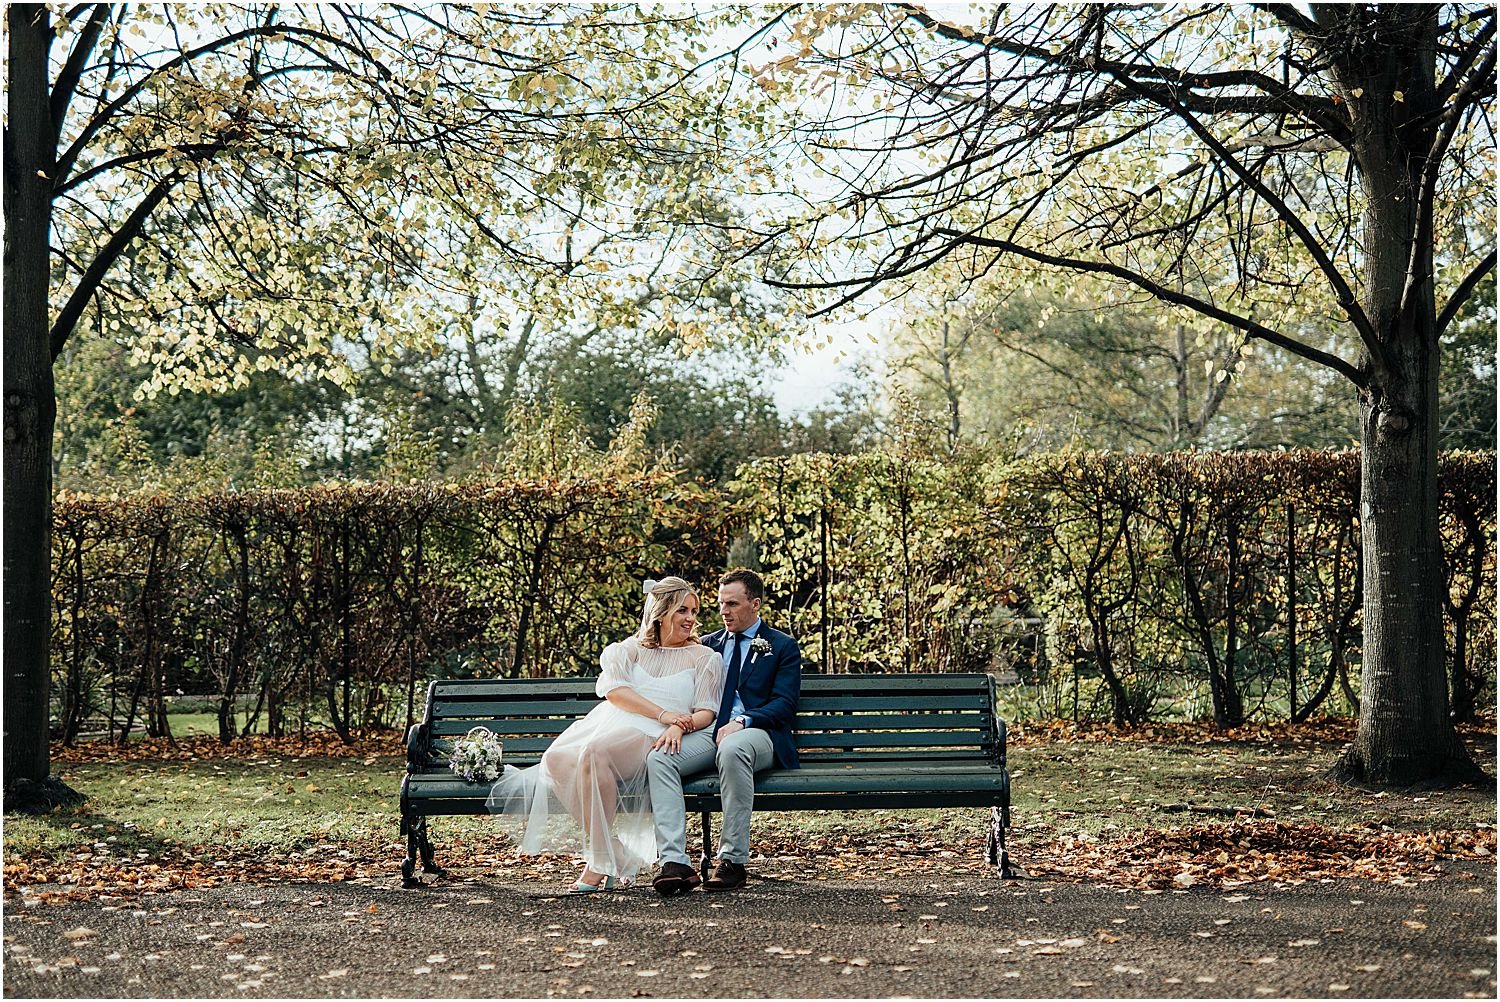 Wedding couple sitting bench 